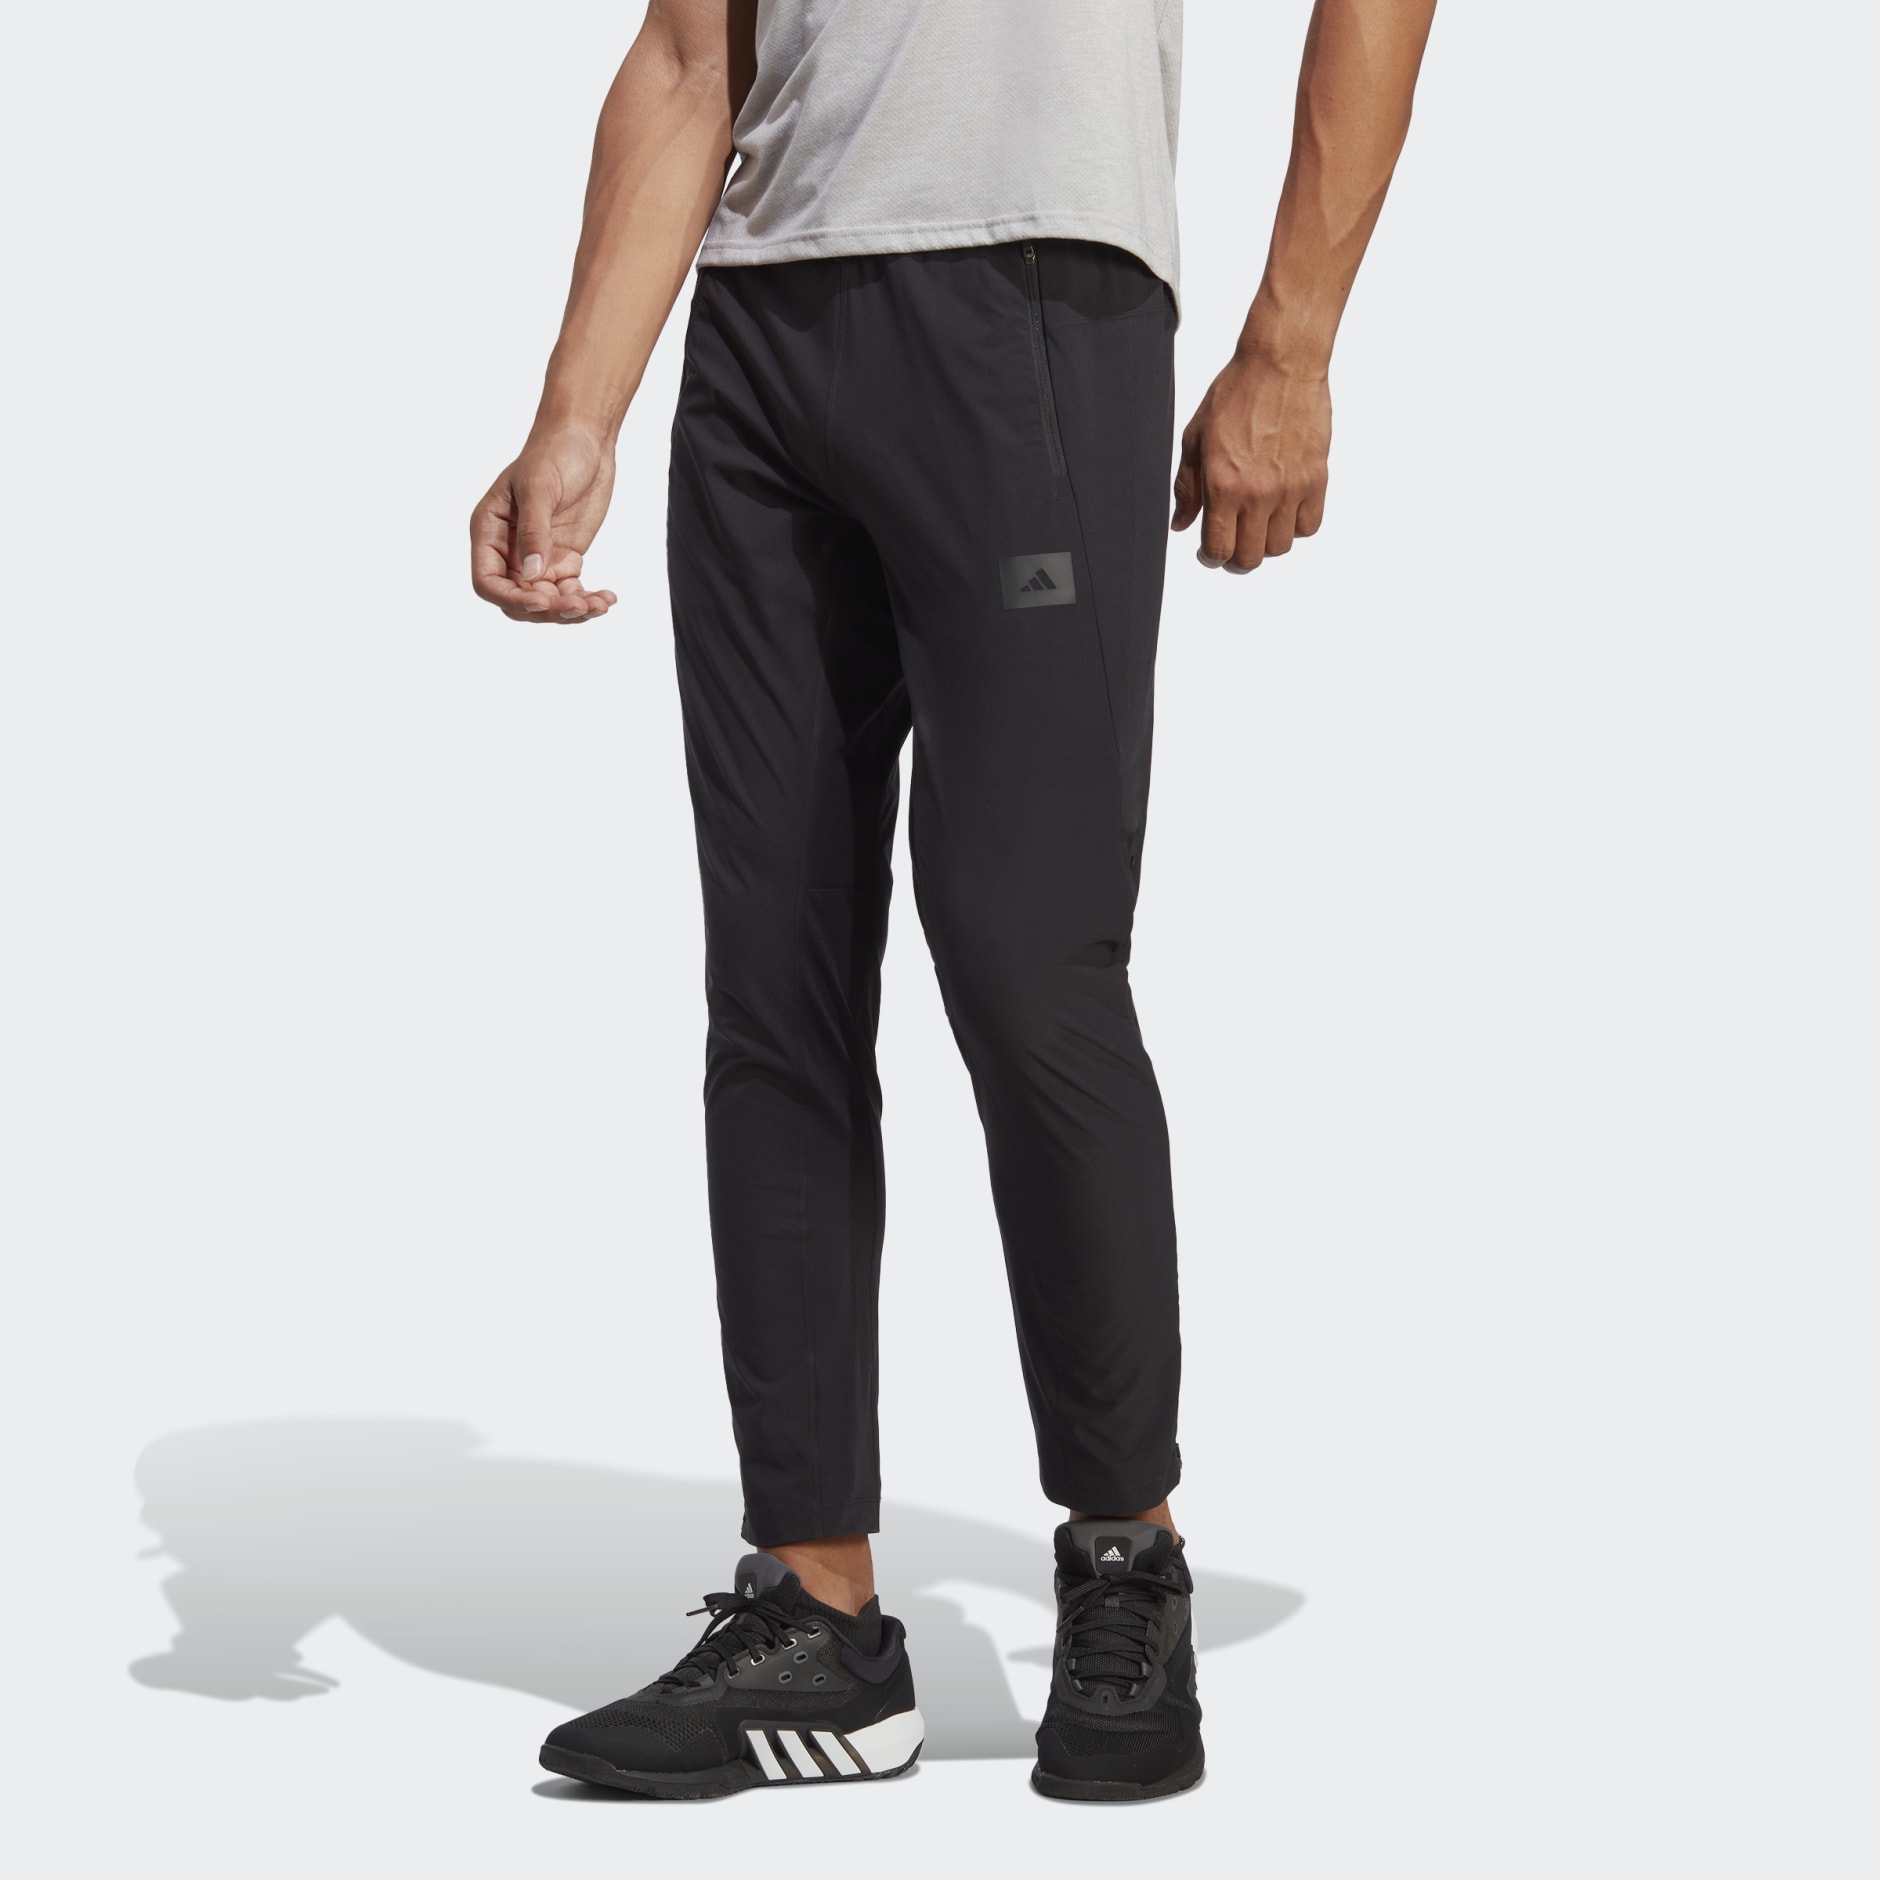 Adidas Women's Climalite Straight Workout Pant | Shac Shop